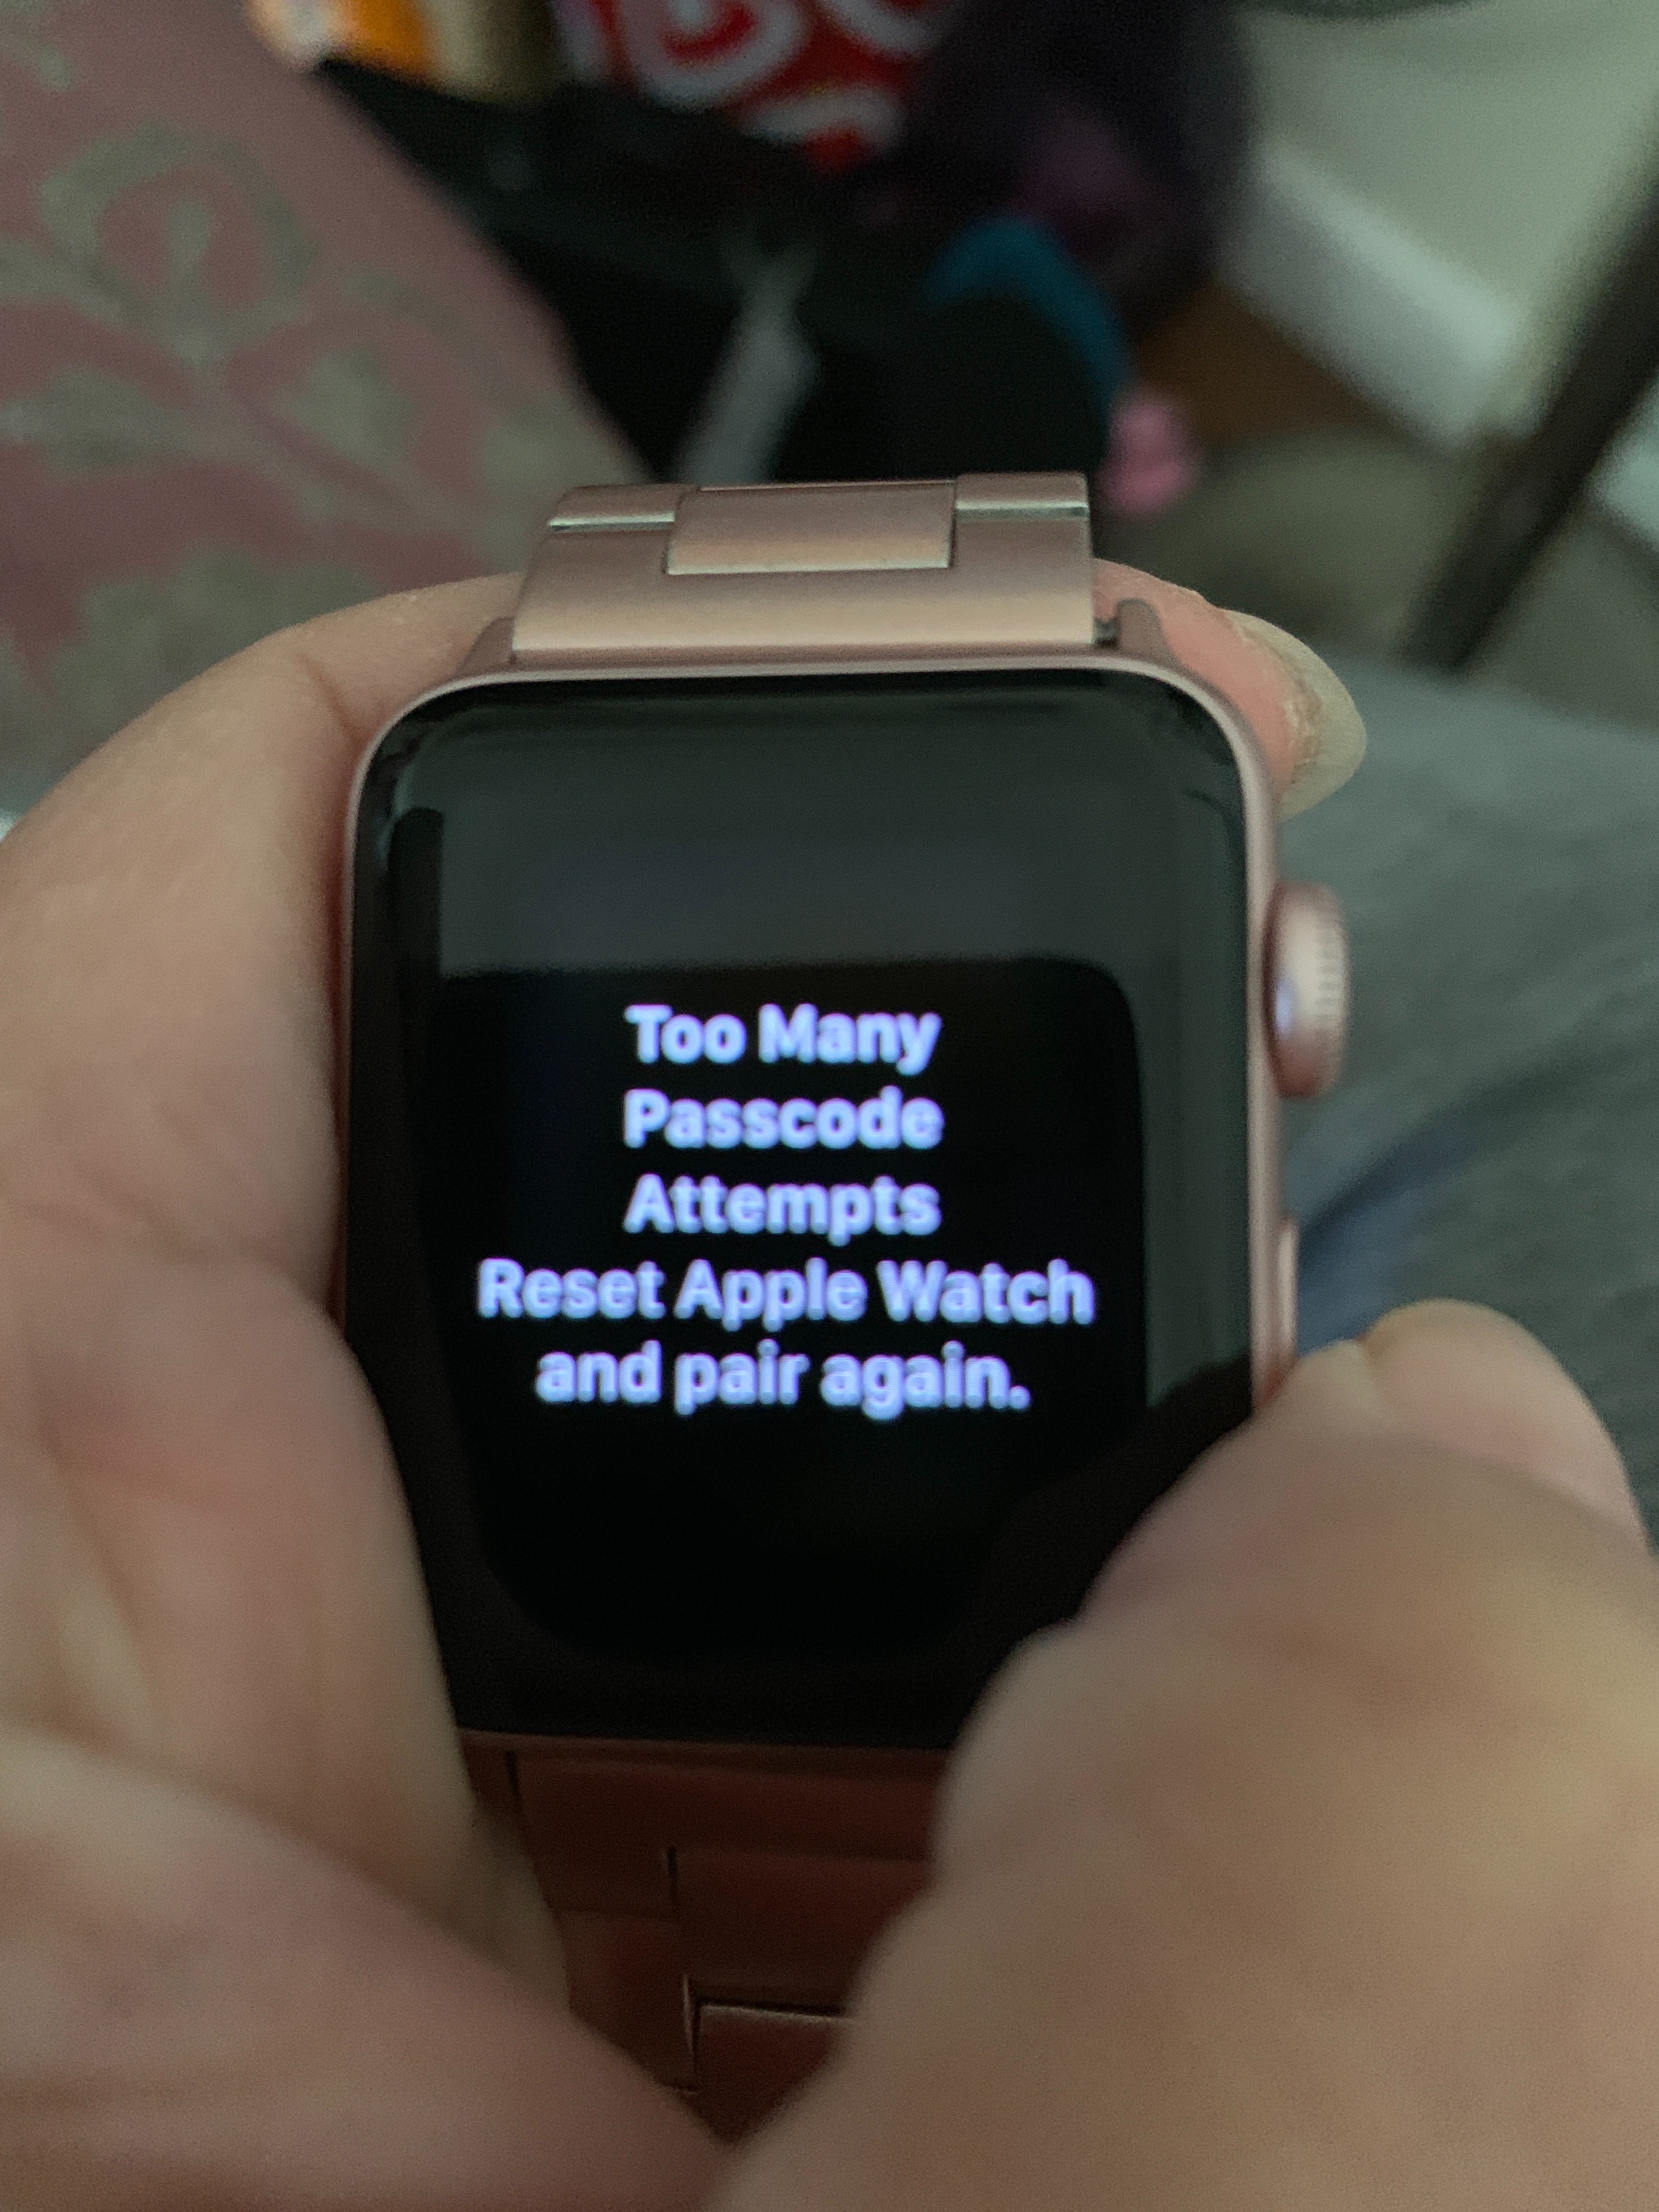 how do i reset my apple watch - Apple Community